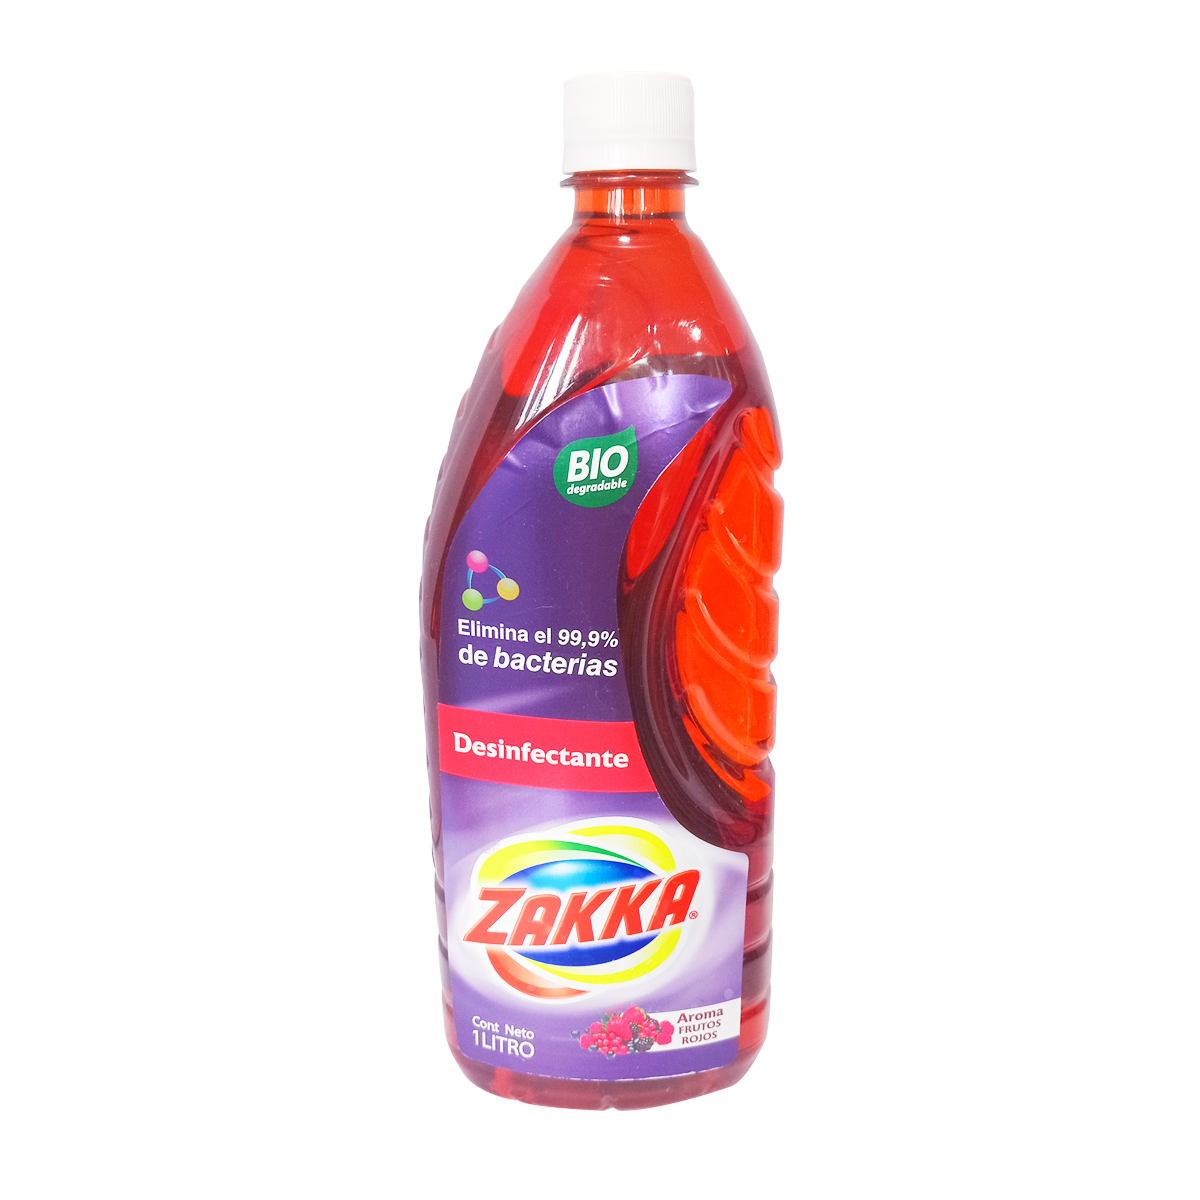 Zakka Desinfectante Frutos rojos 1lt